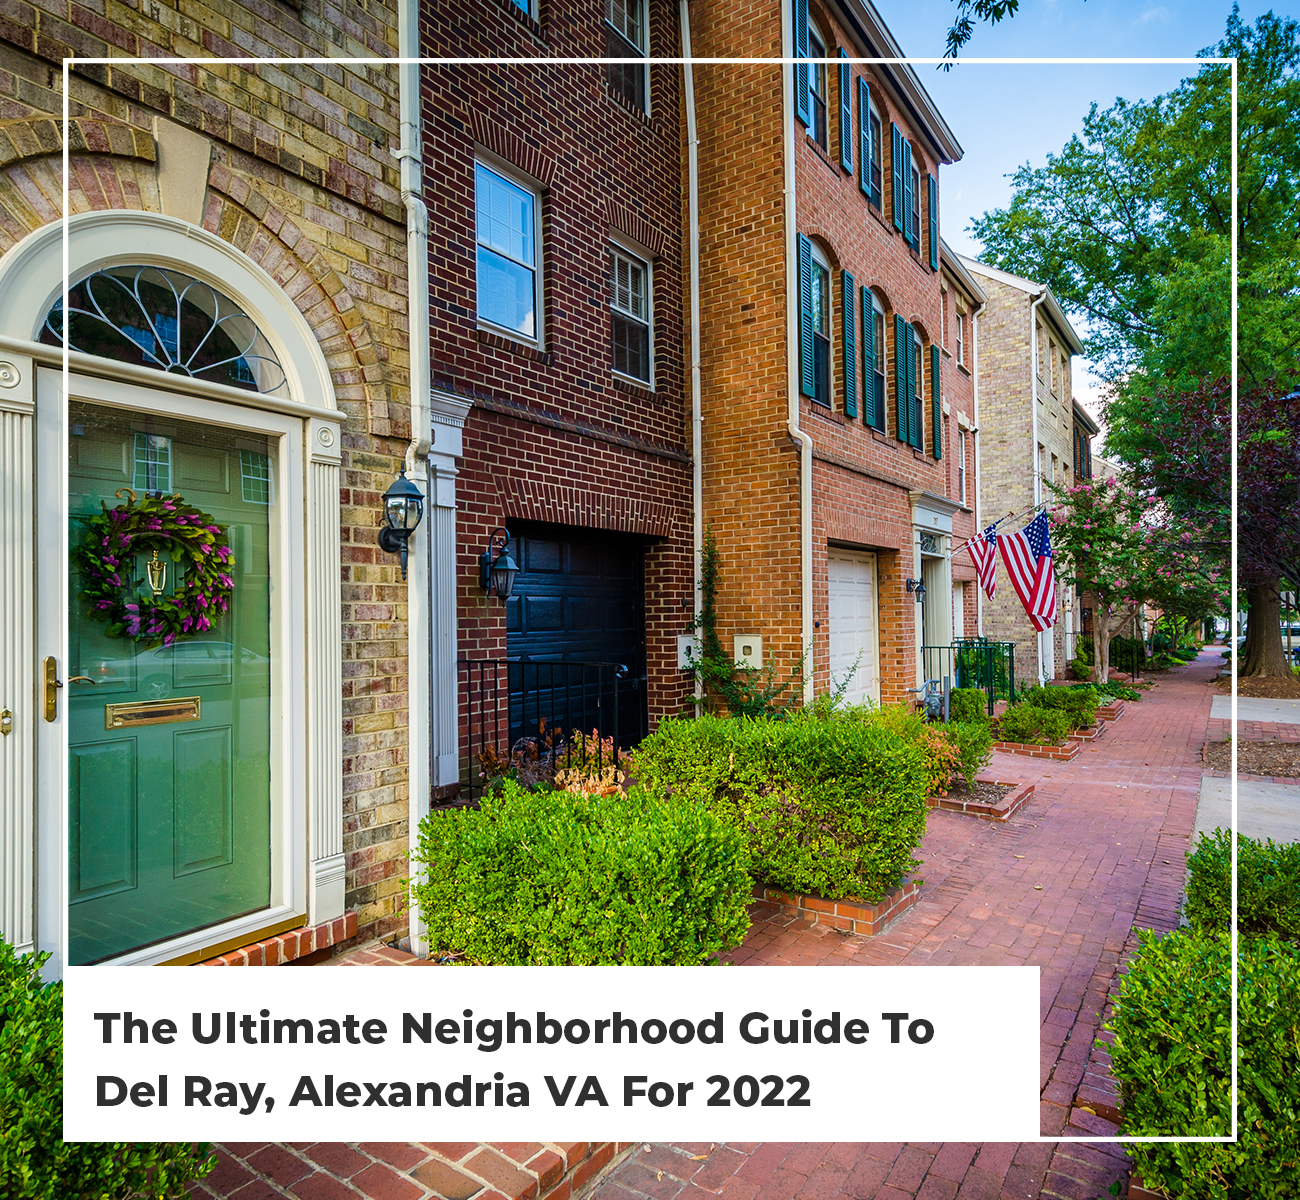 The Ultimate Neighborhood Guide To Del Ray, Alexandria VA - Main Image